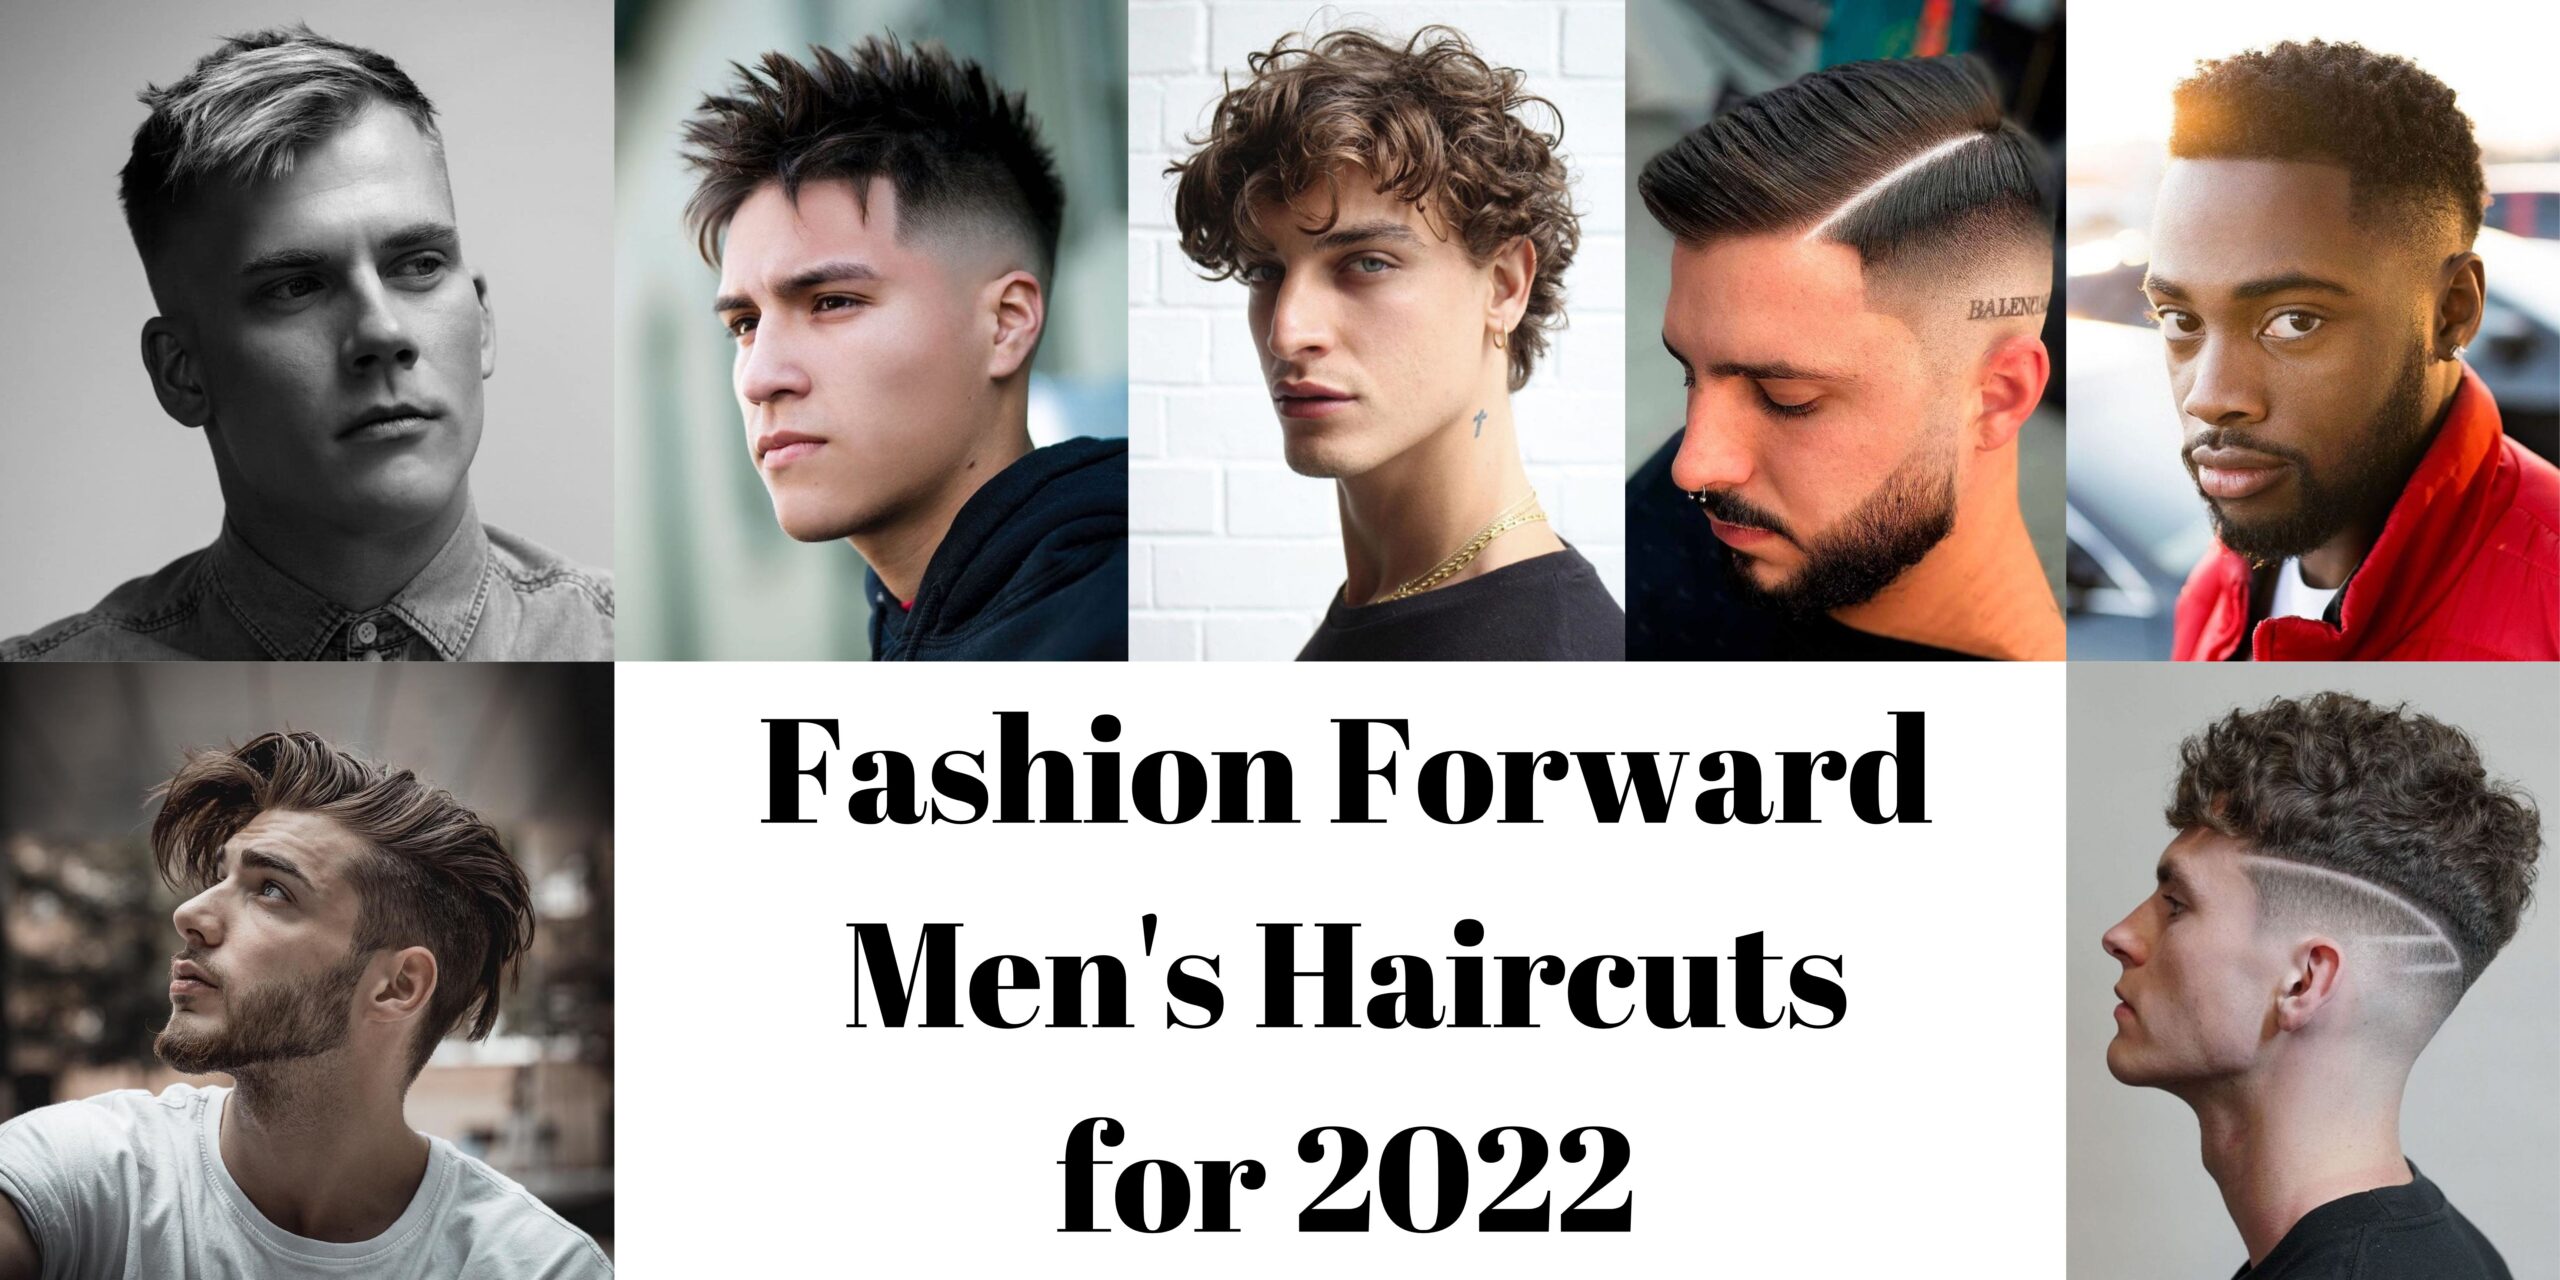 Fashion Forward Men's Haircuts for 2022